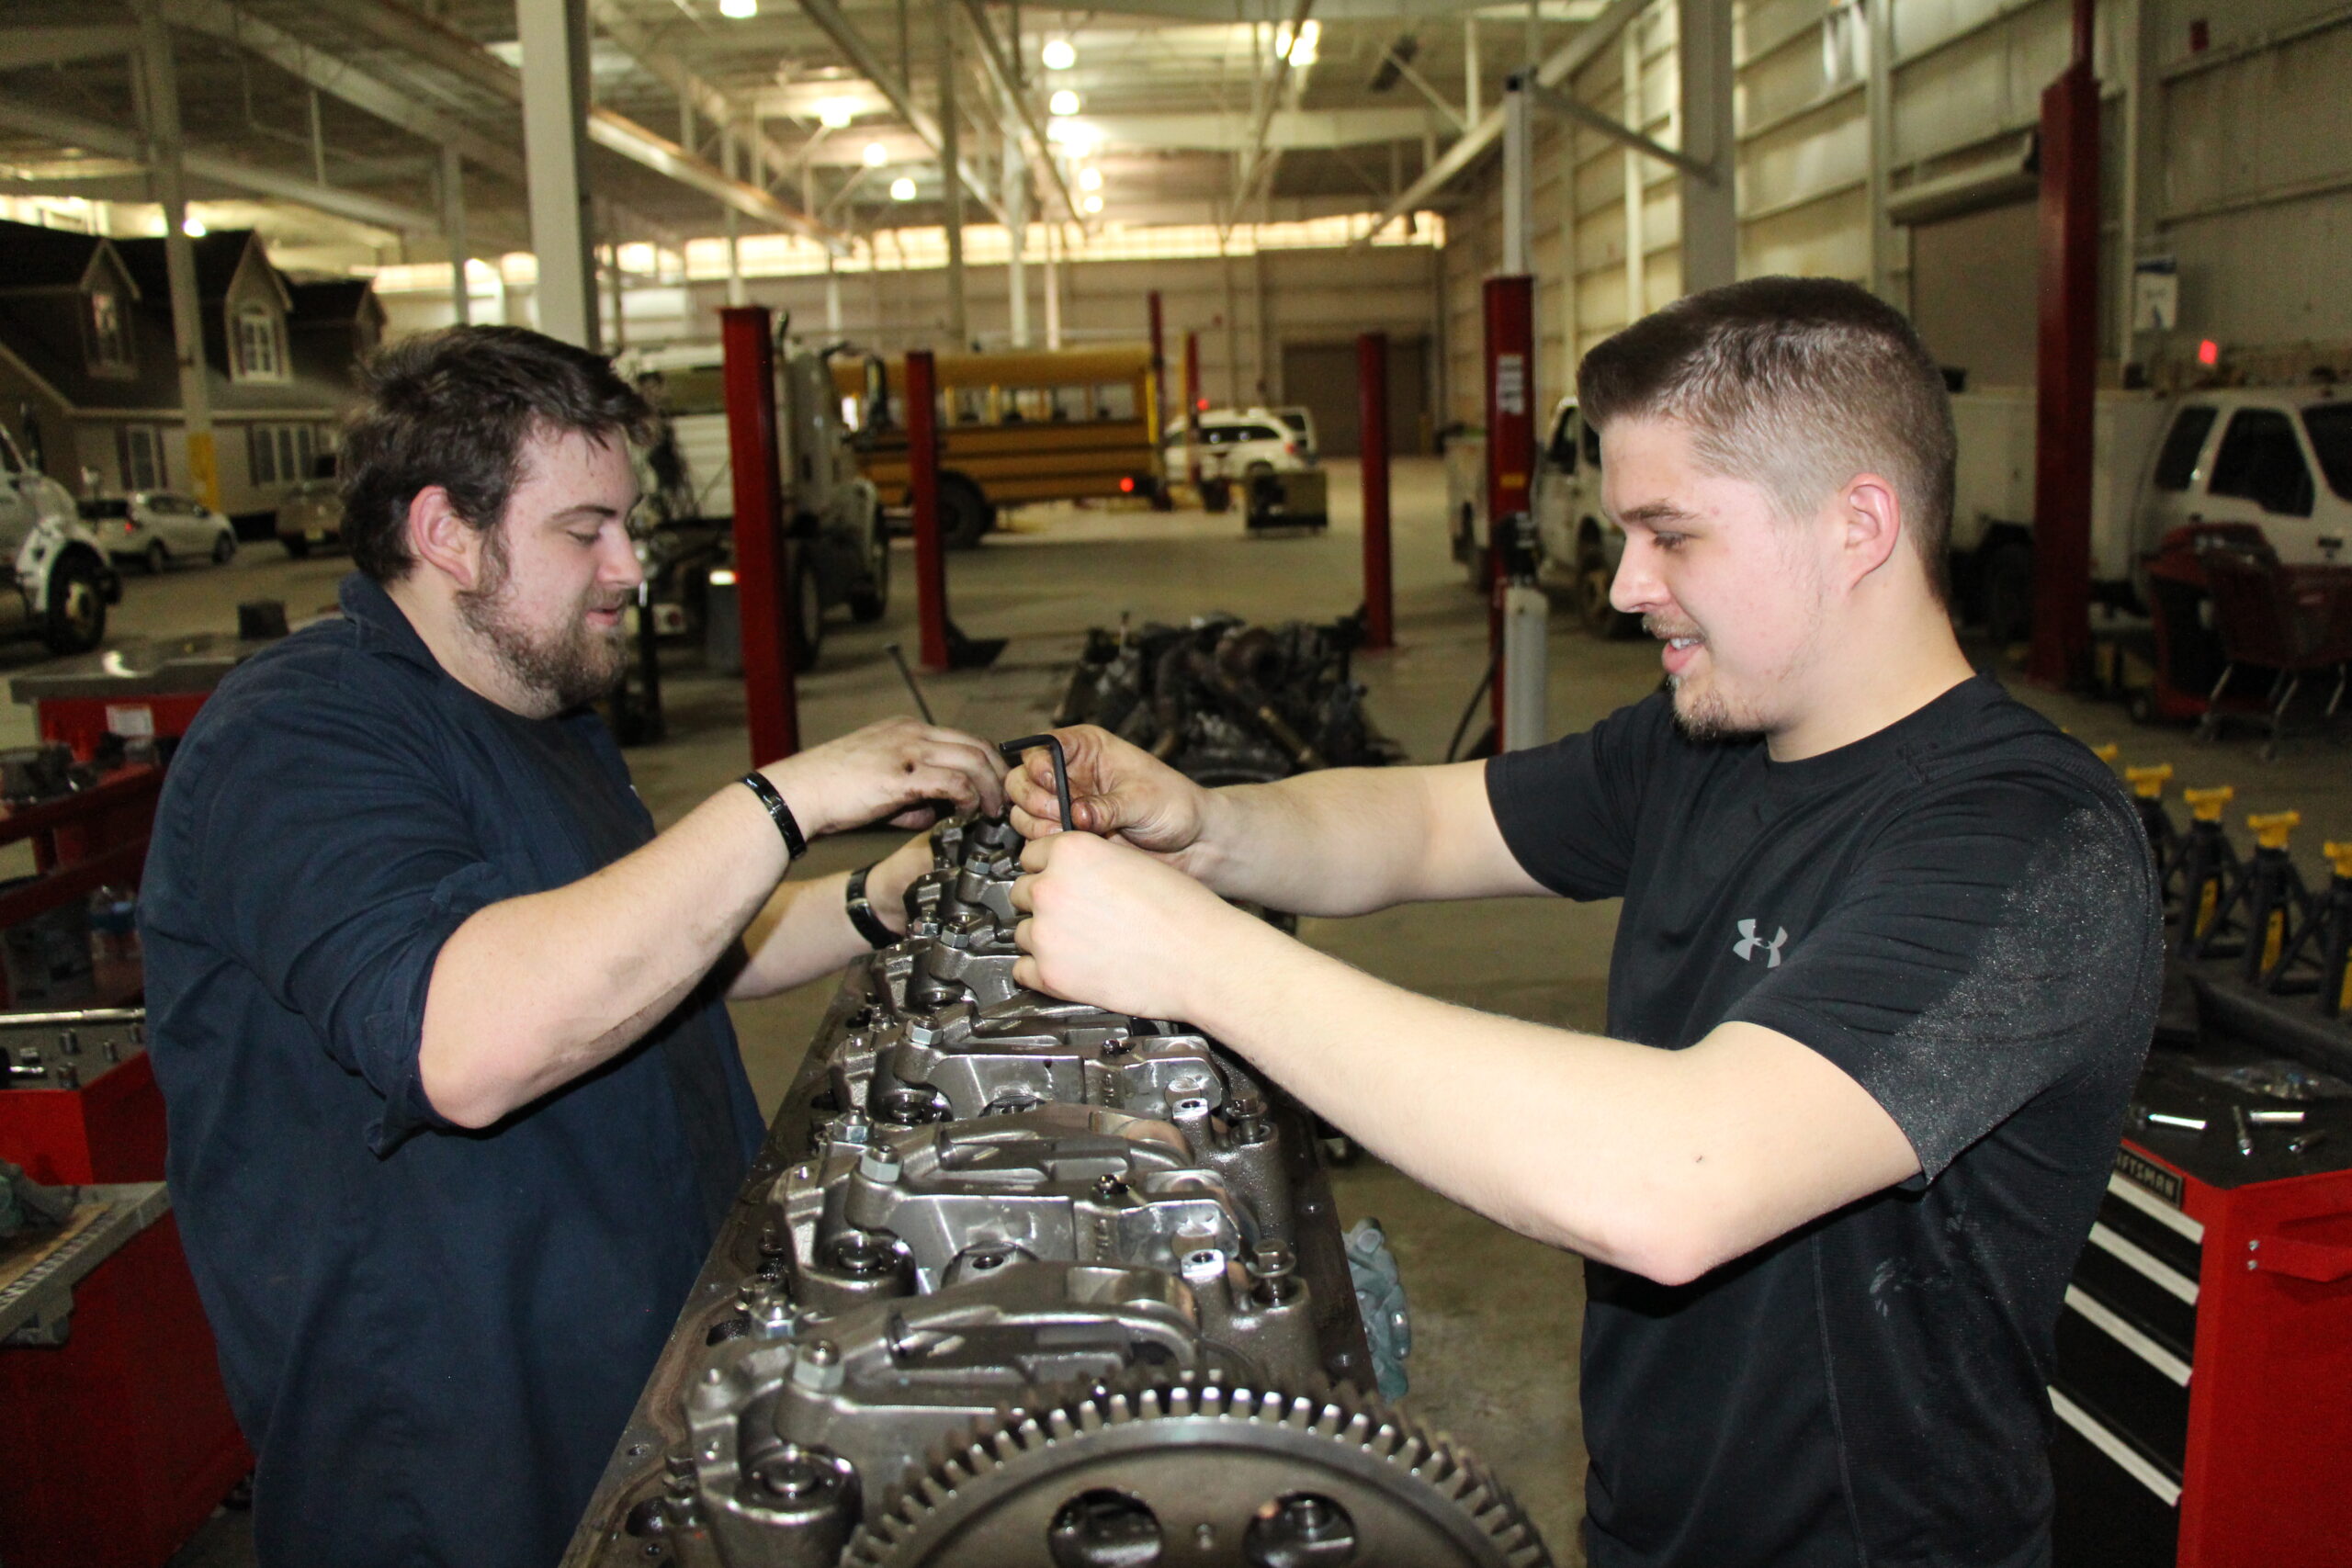 Diesel Service Technology program students work on assembling an engine.